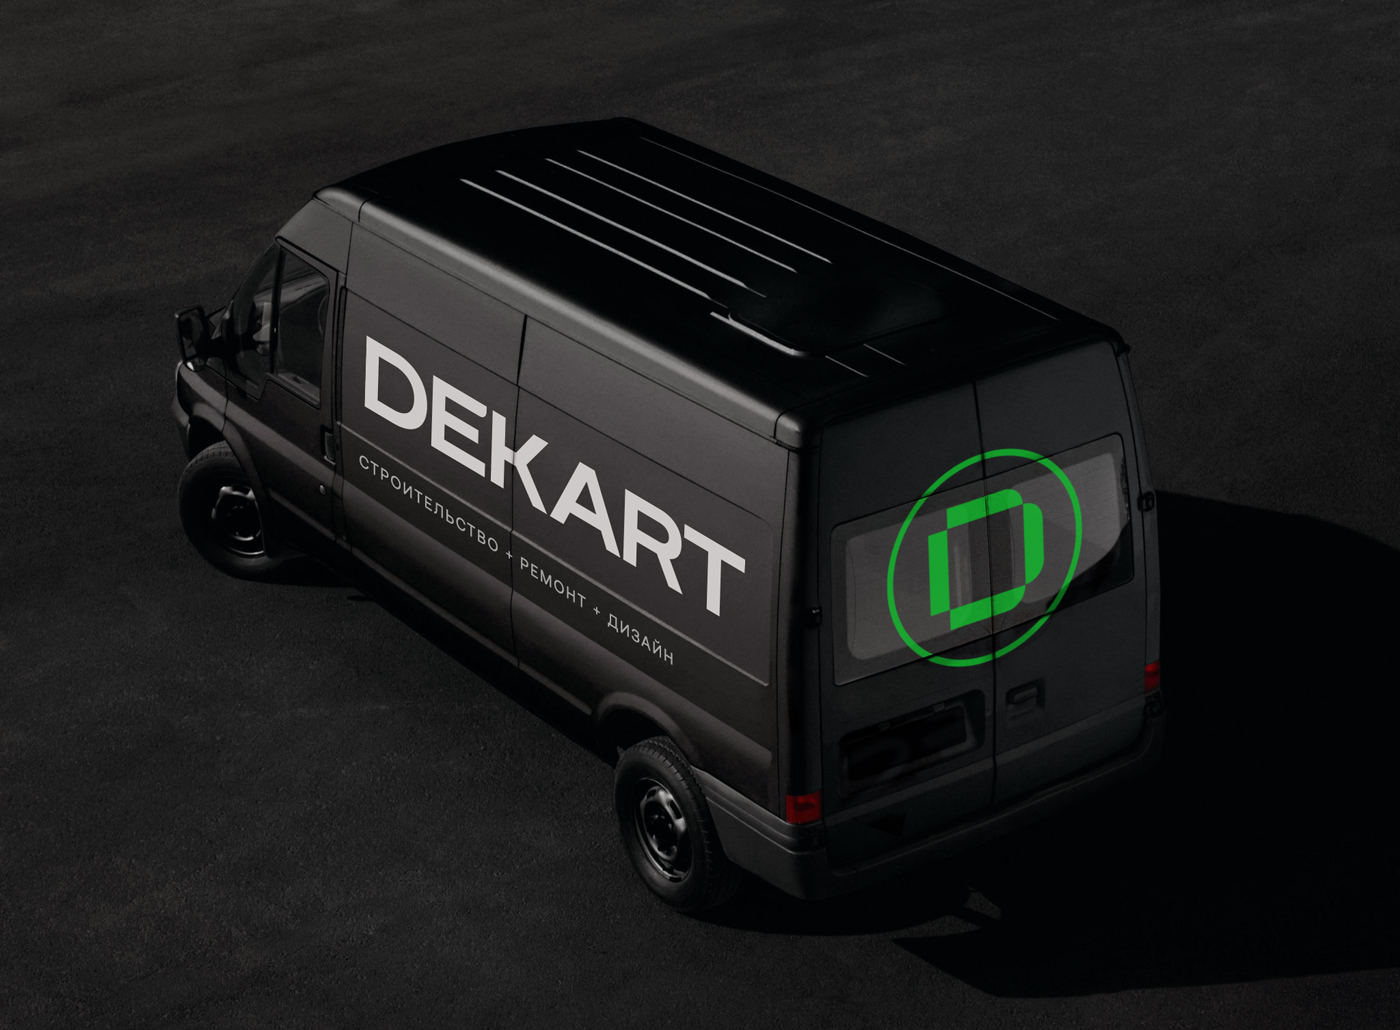 Трансформация бренда Dekart